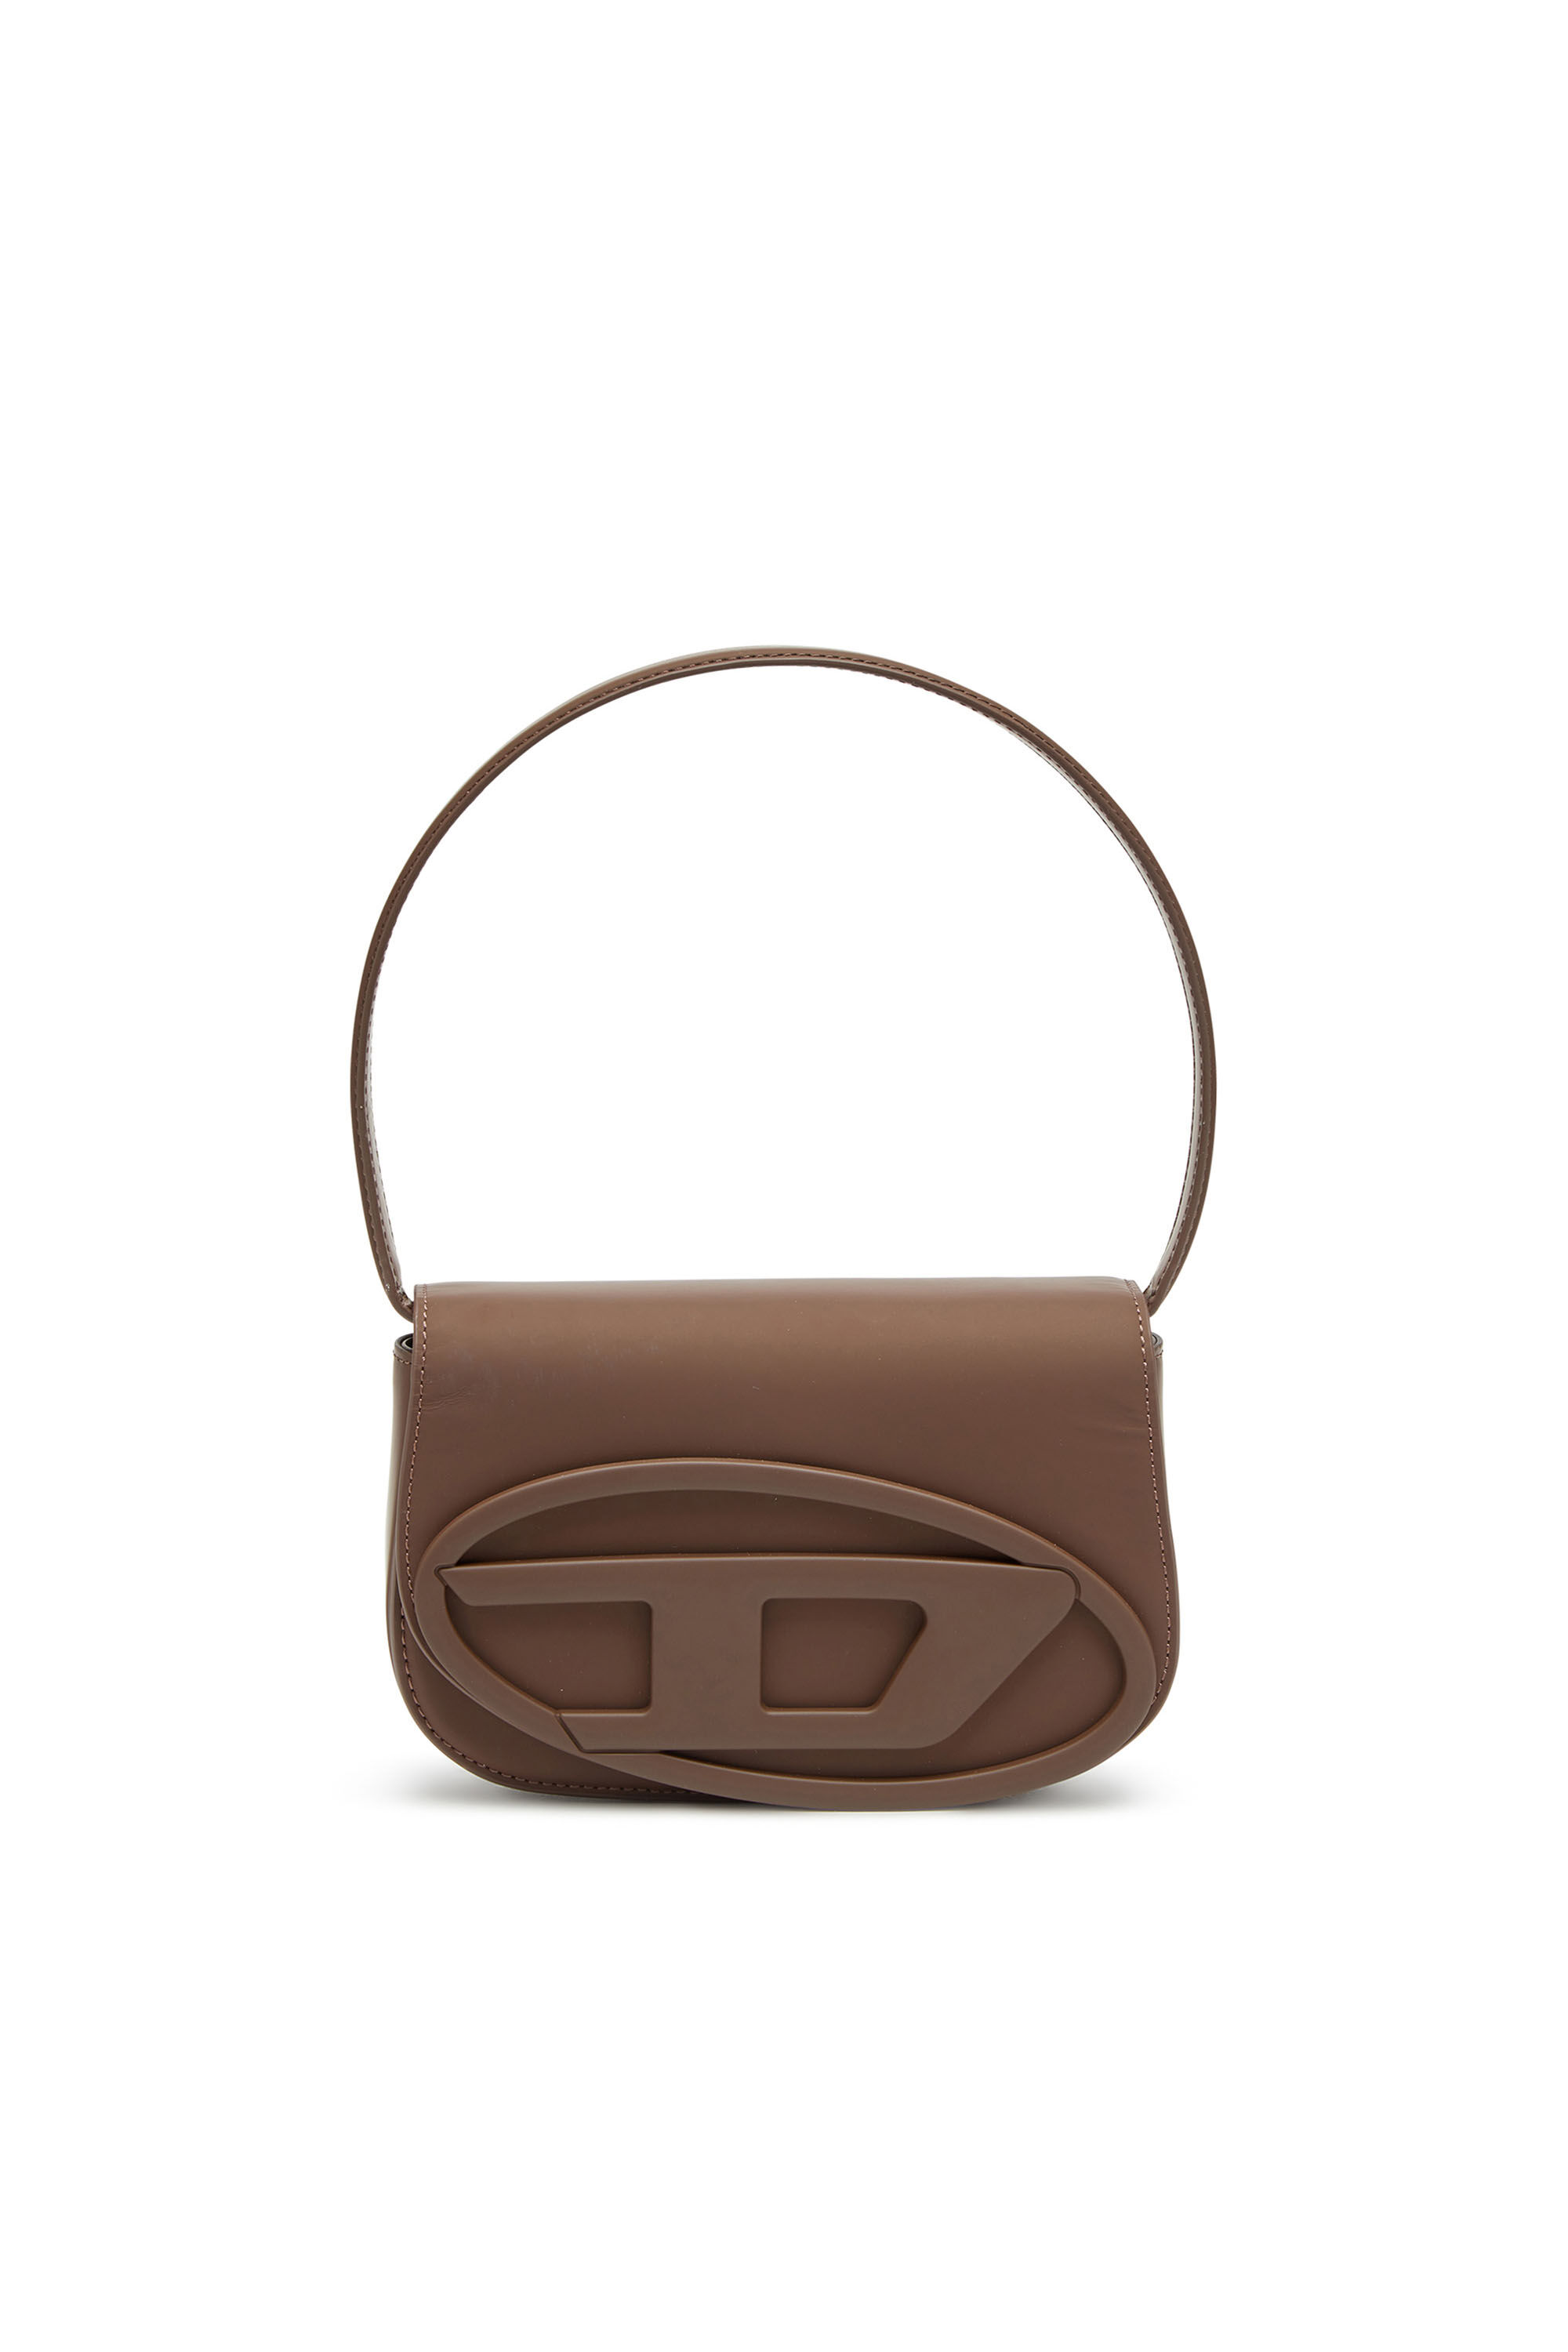 Women's 1DR - Iconic shoulder bag in matte leather | Brown | Diesel